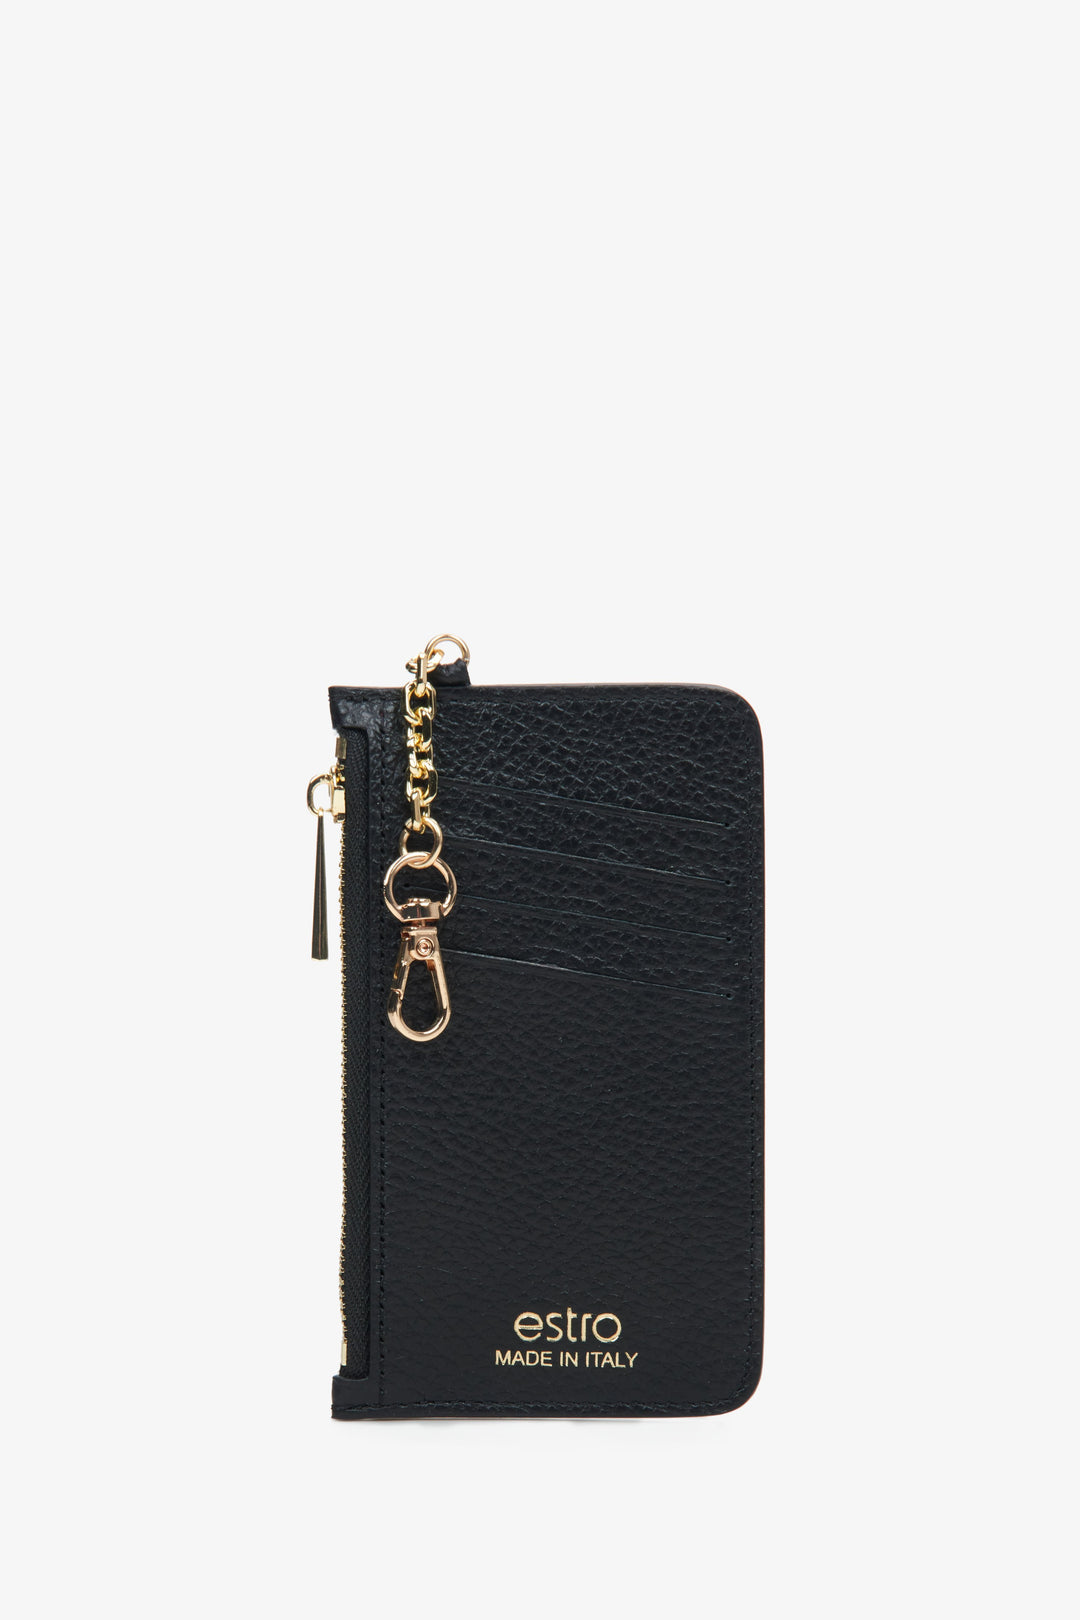 Women's Compact Black Wallet made of Genuine Italian Leather Estro ER00115018.